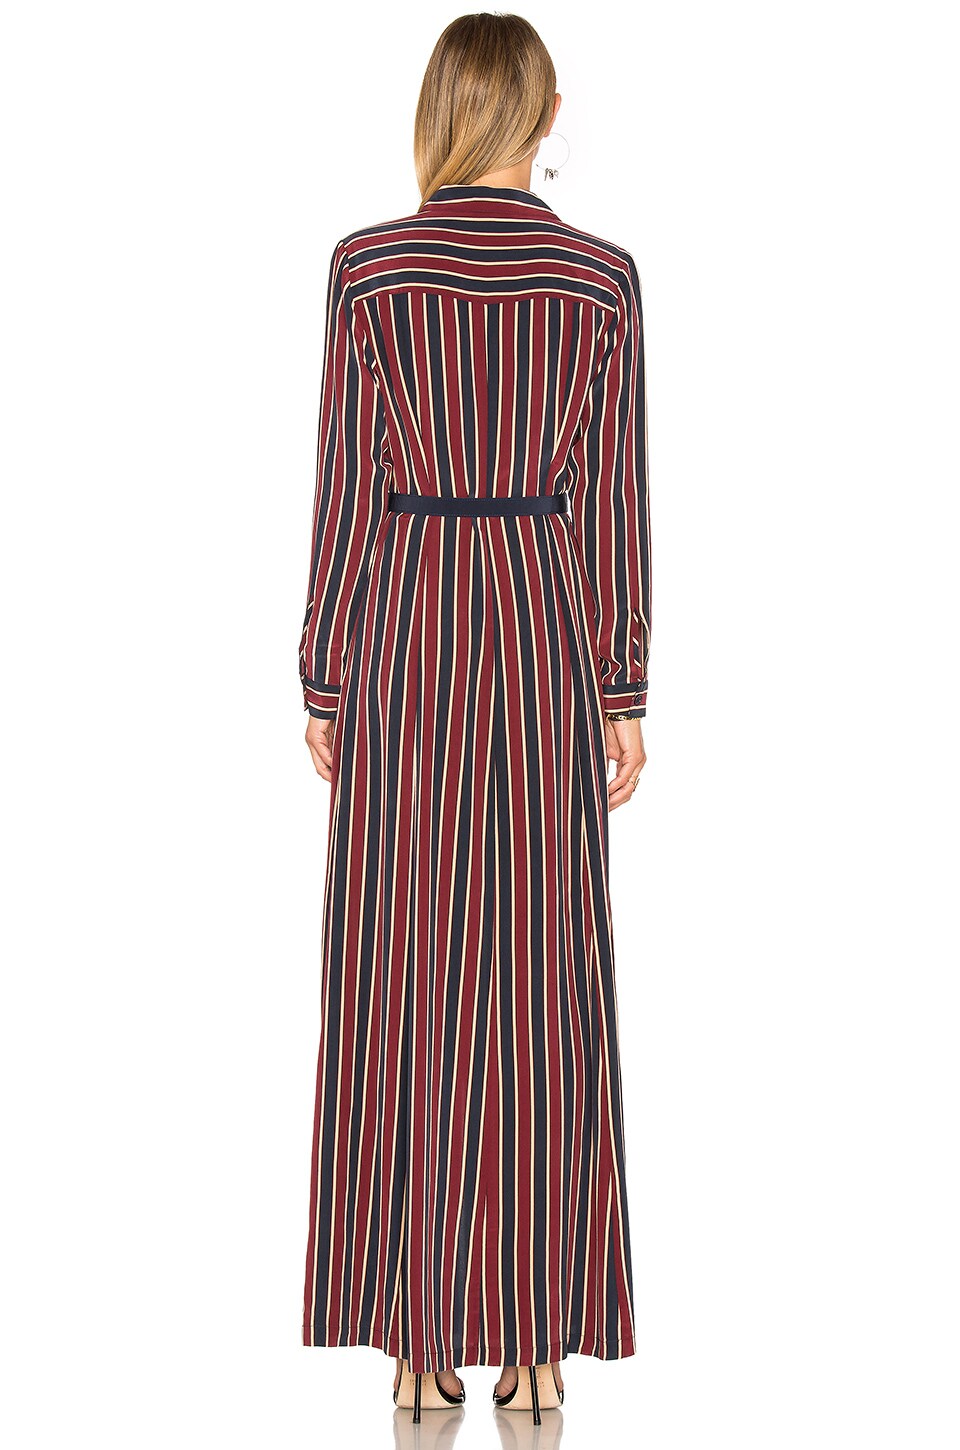 Ganni Donaldson Silk Maxi Dress in Cabernet Stripe | REVOLVE